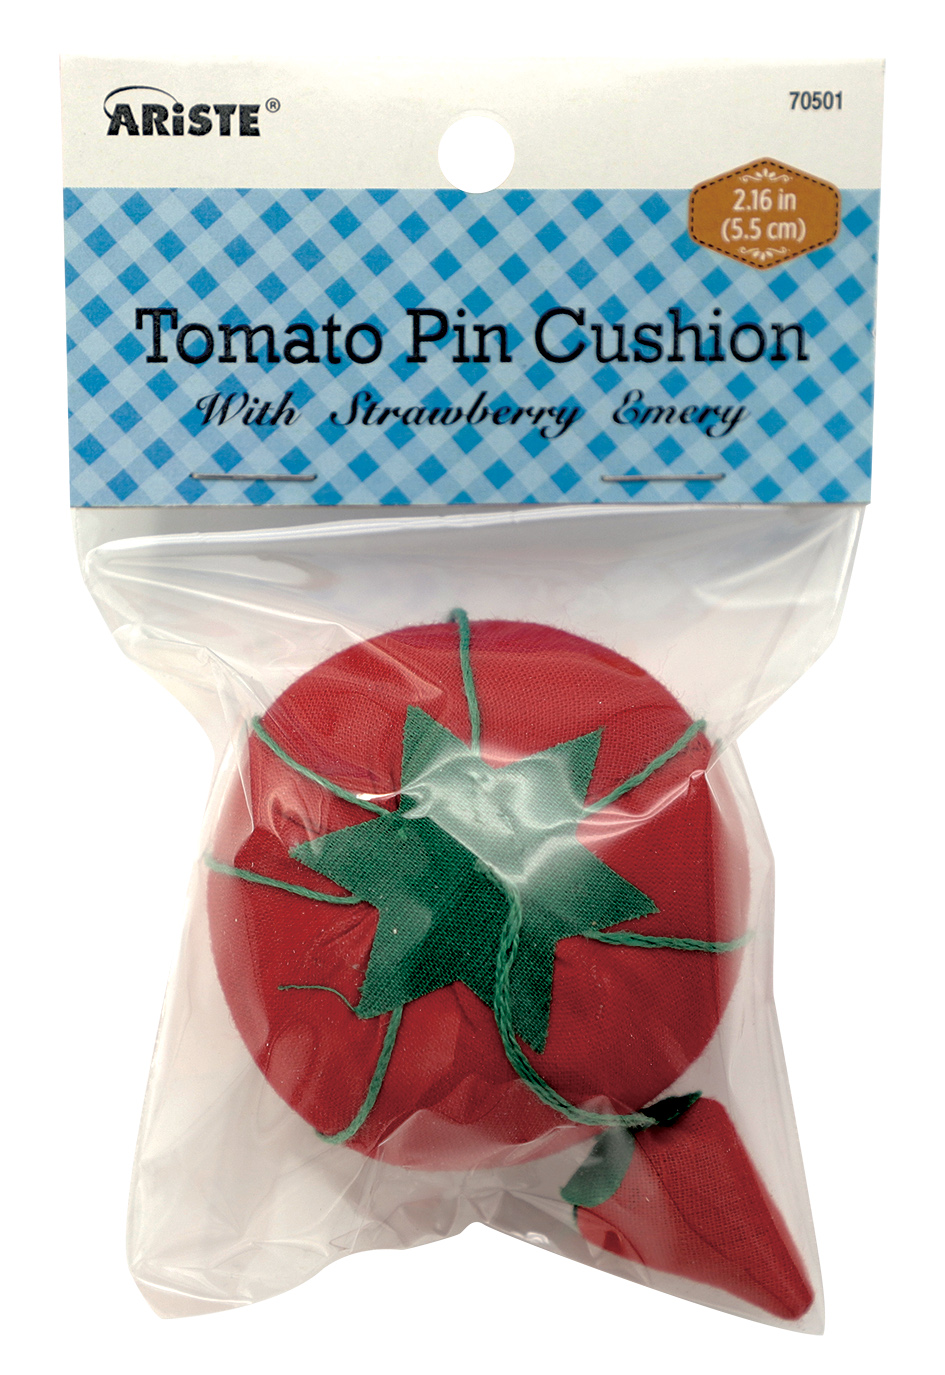 70501 tomato pin cushion